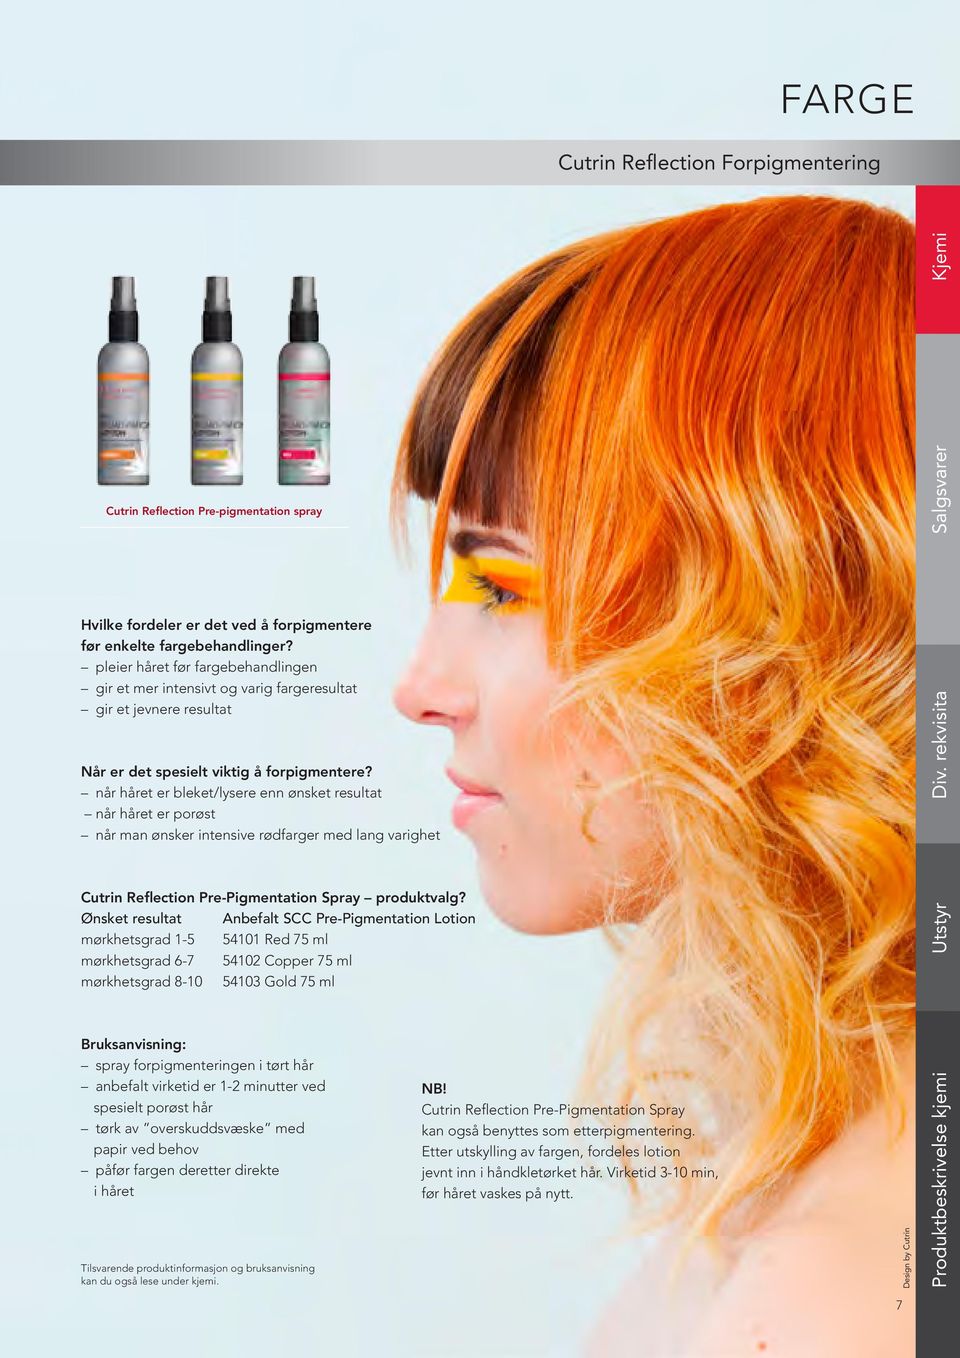 når håret er bleket/lysere enn ønsket resultat når håret er porøst når man ønsker intensive rødfarger med lang varighet Cutrin Reflection Pre-Pigmentation Spray produktvalg?